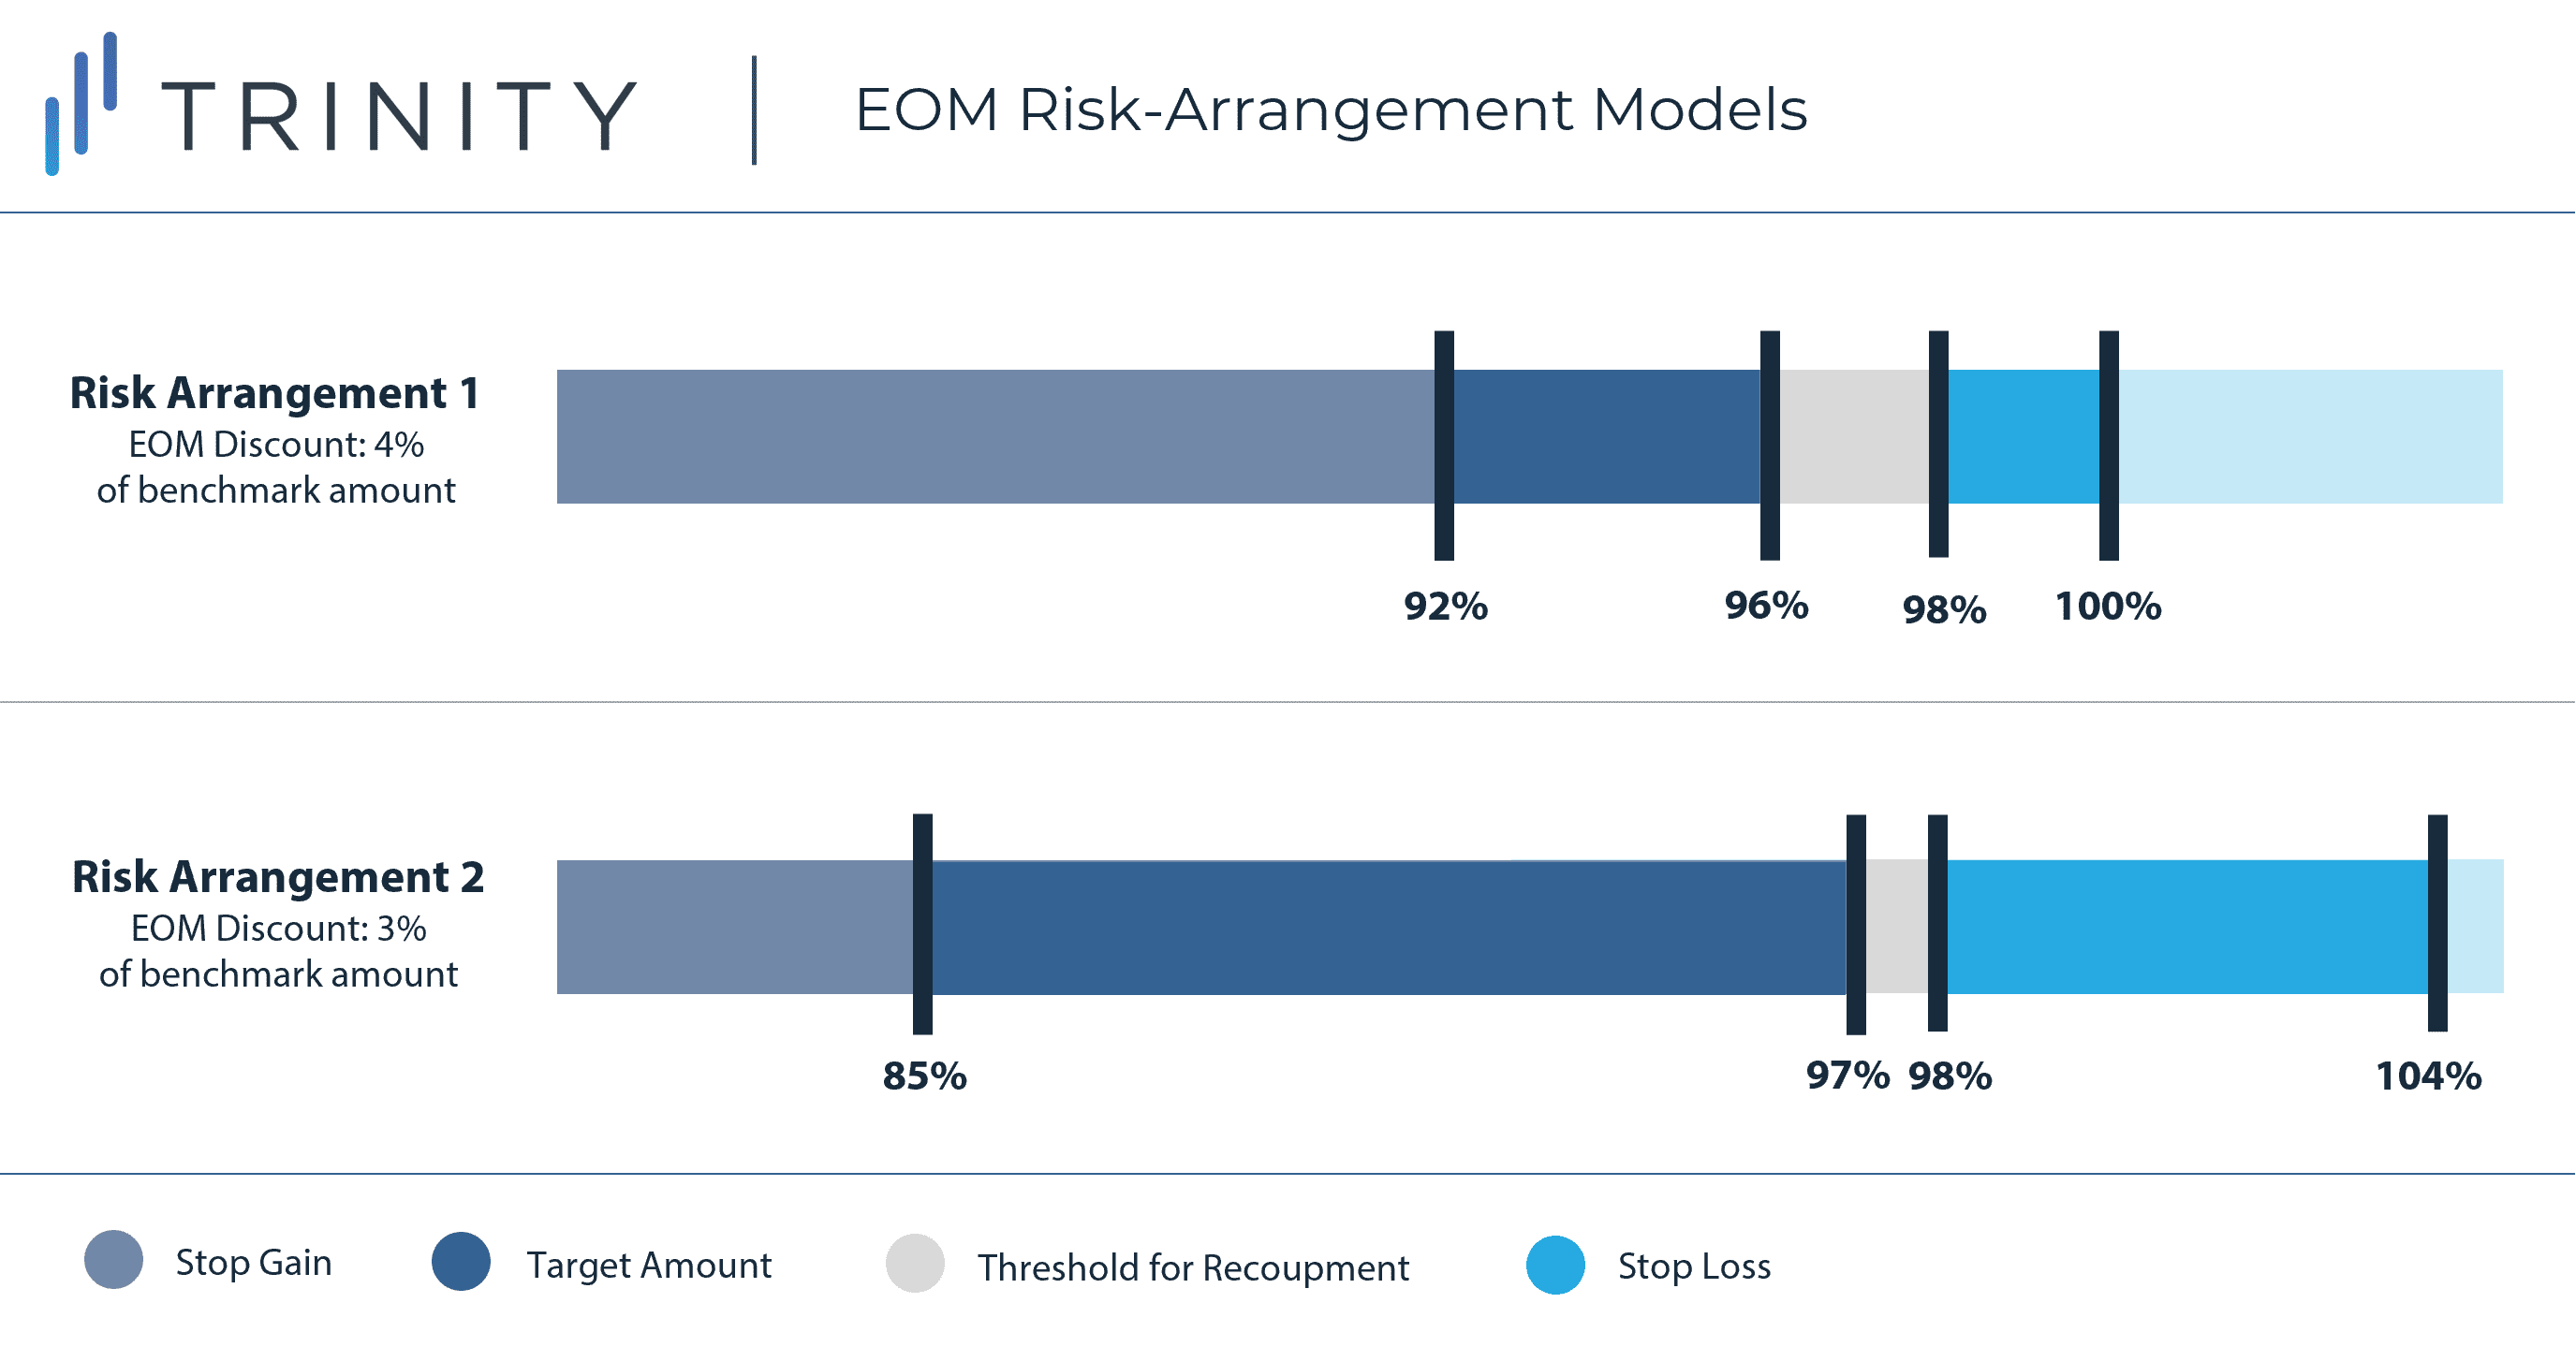 Stacked bar chart comparing 2 EOM risk-arrangement models. EOM discounts for models: RA1 4%, RA2 3%